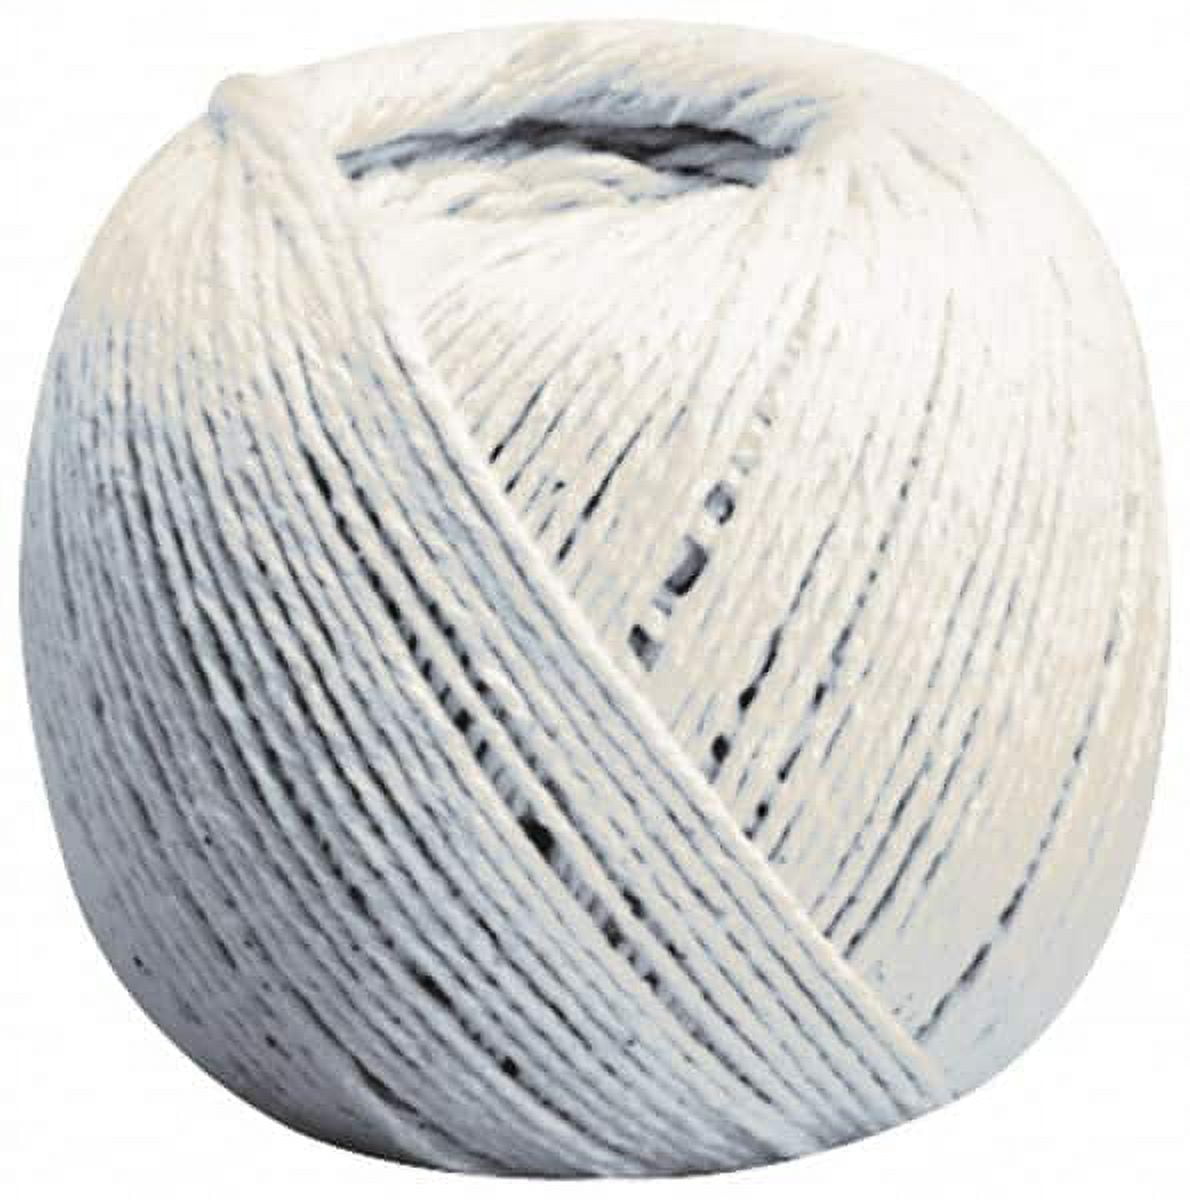 5/32 Diameter Cotton Sash Cord Twine, Natural Color, 200 Feet